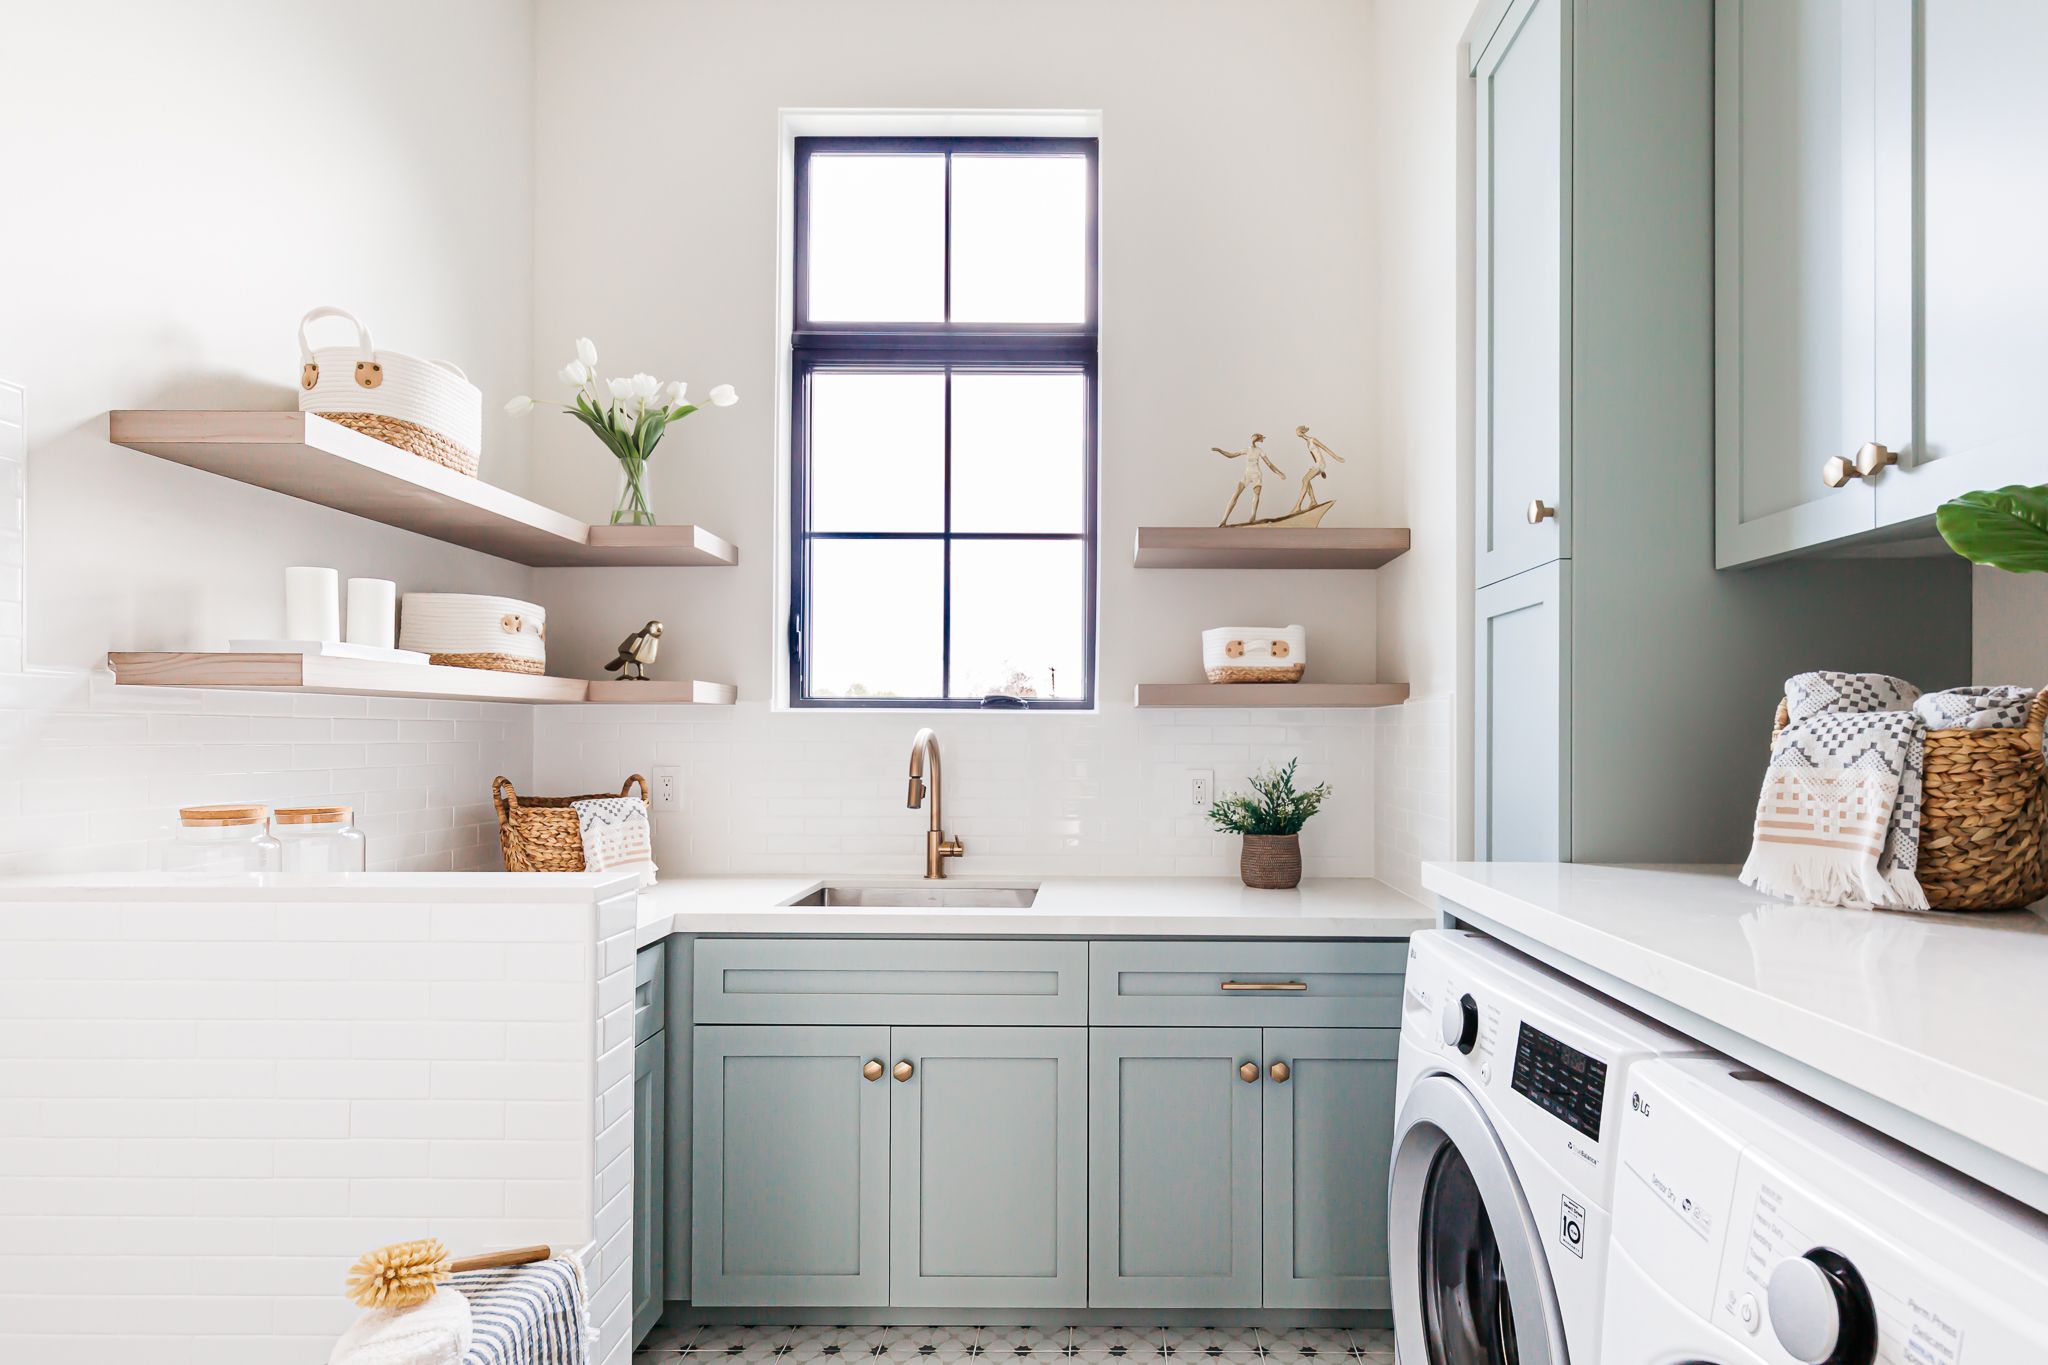 55 Laundry Room Ideas That Will Make Doing Laundry a Joy